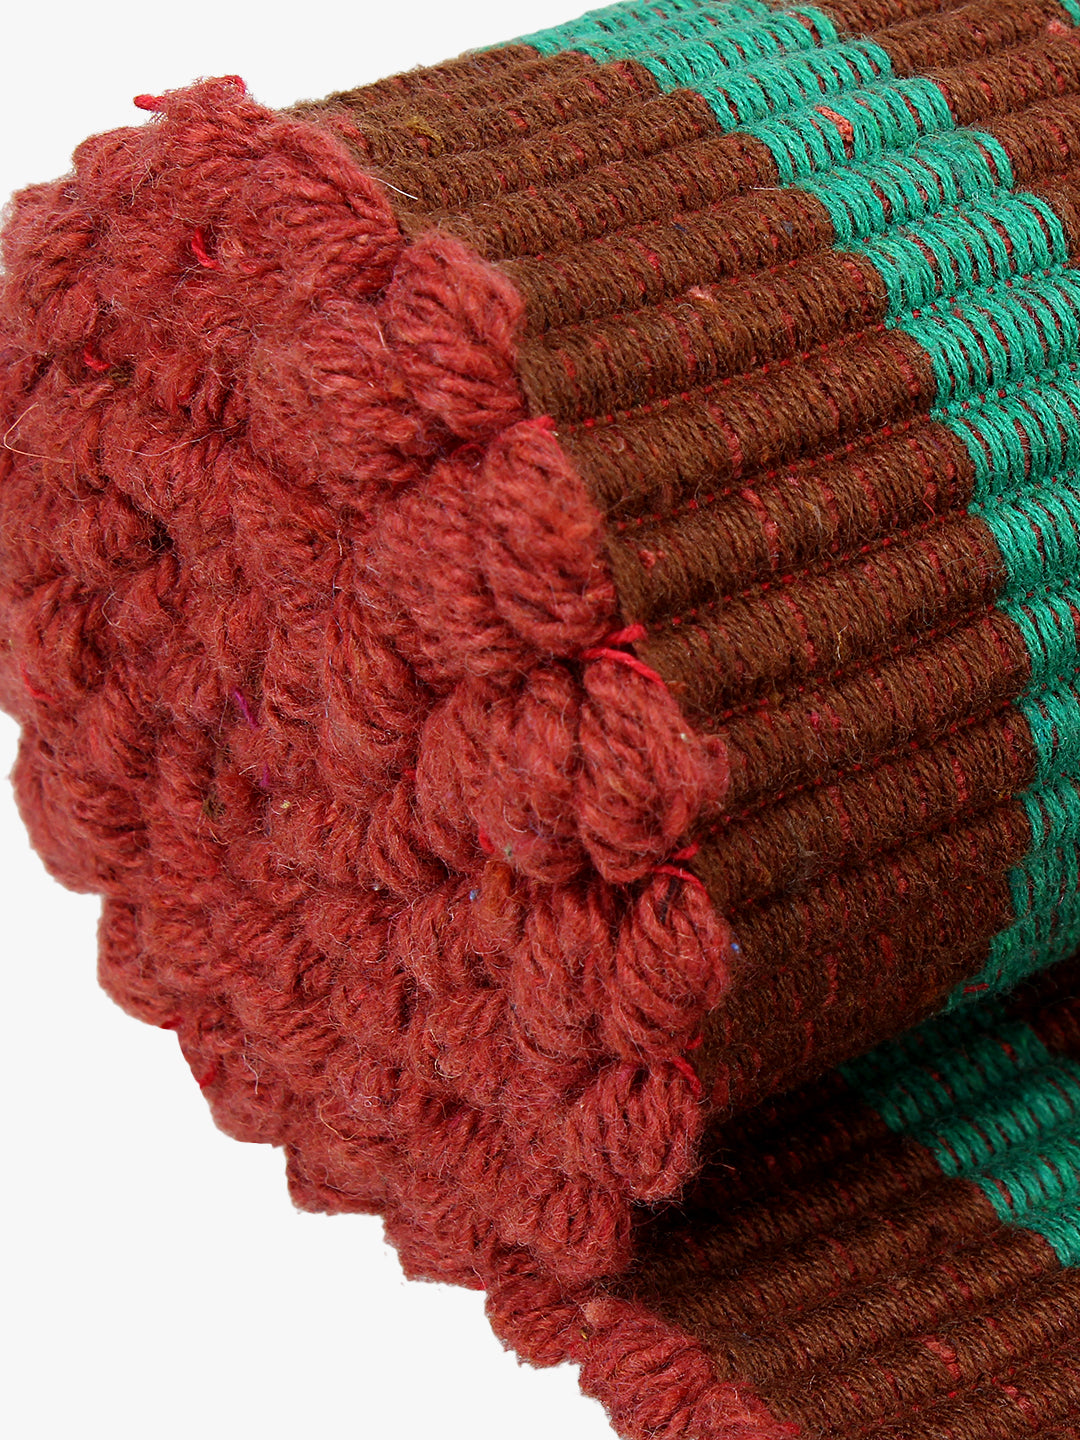 Klotthe Red Rectangular Striped Cotton Anti-Skid Rugs